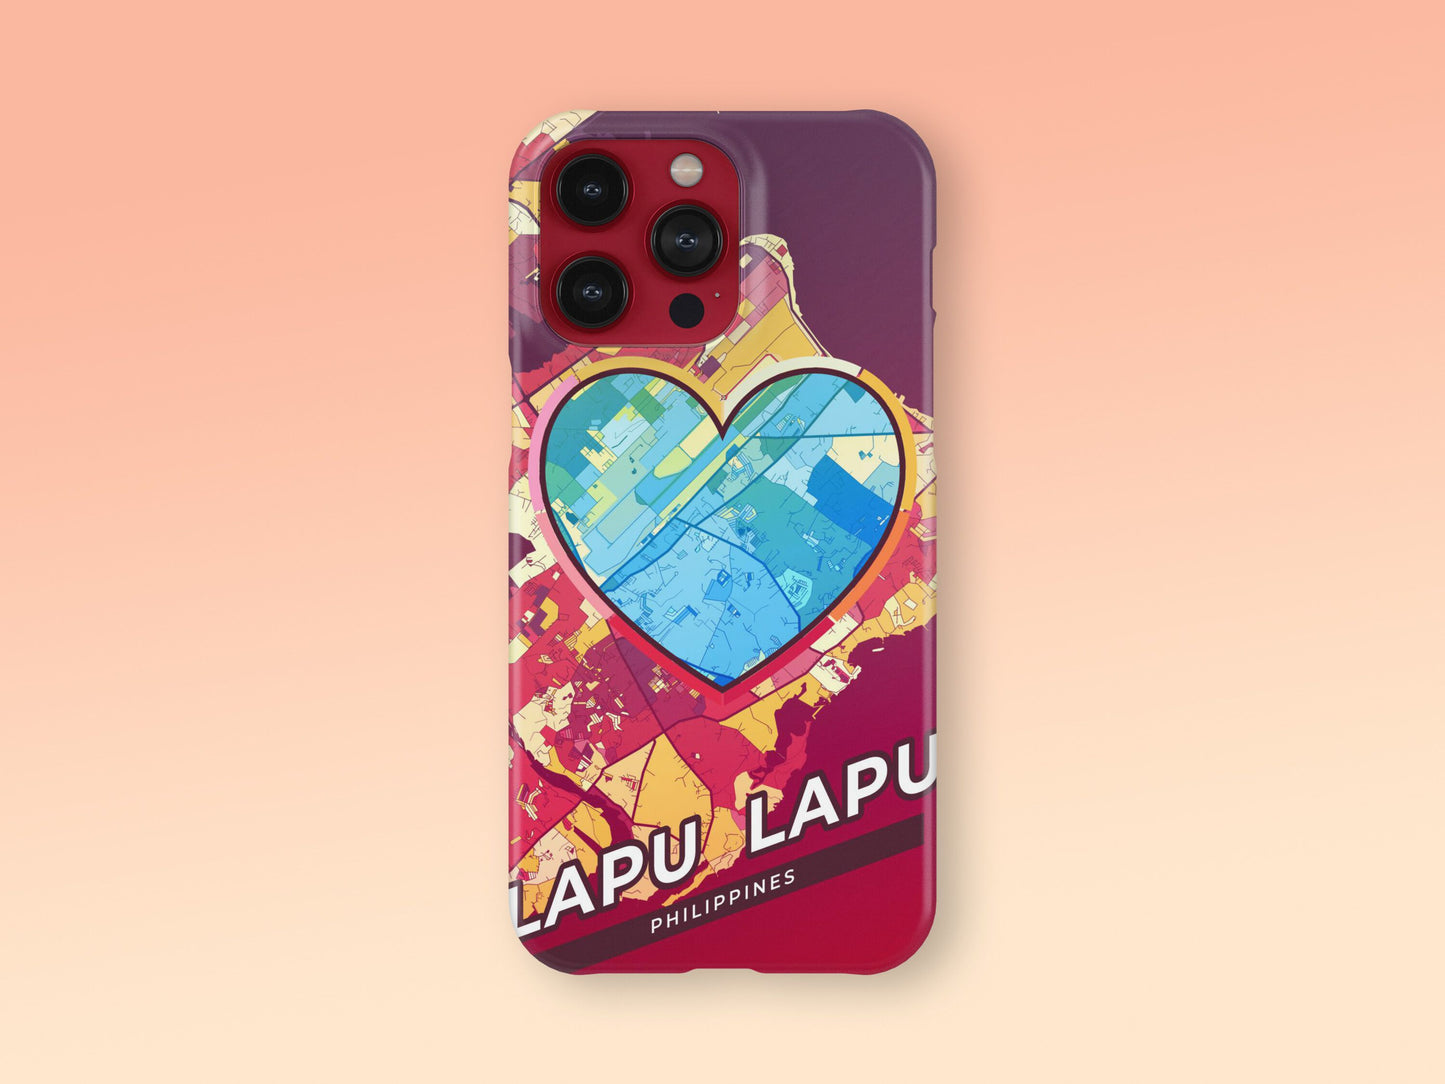 Lapu‑Lapu Philippines slim phone case with colorful icon. Birthday, wedding or housewarming gift. Couple match cases. 2